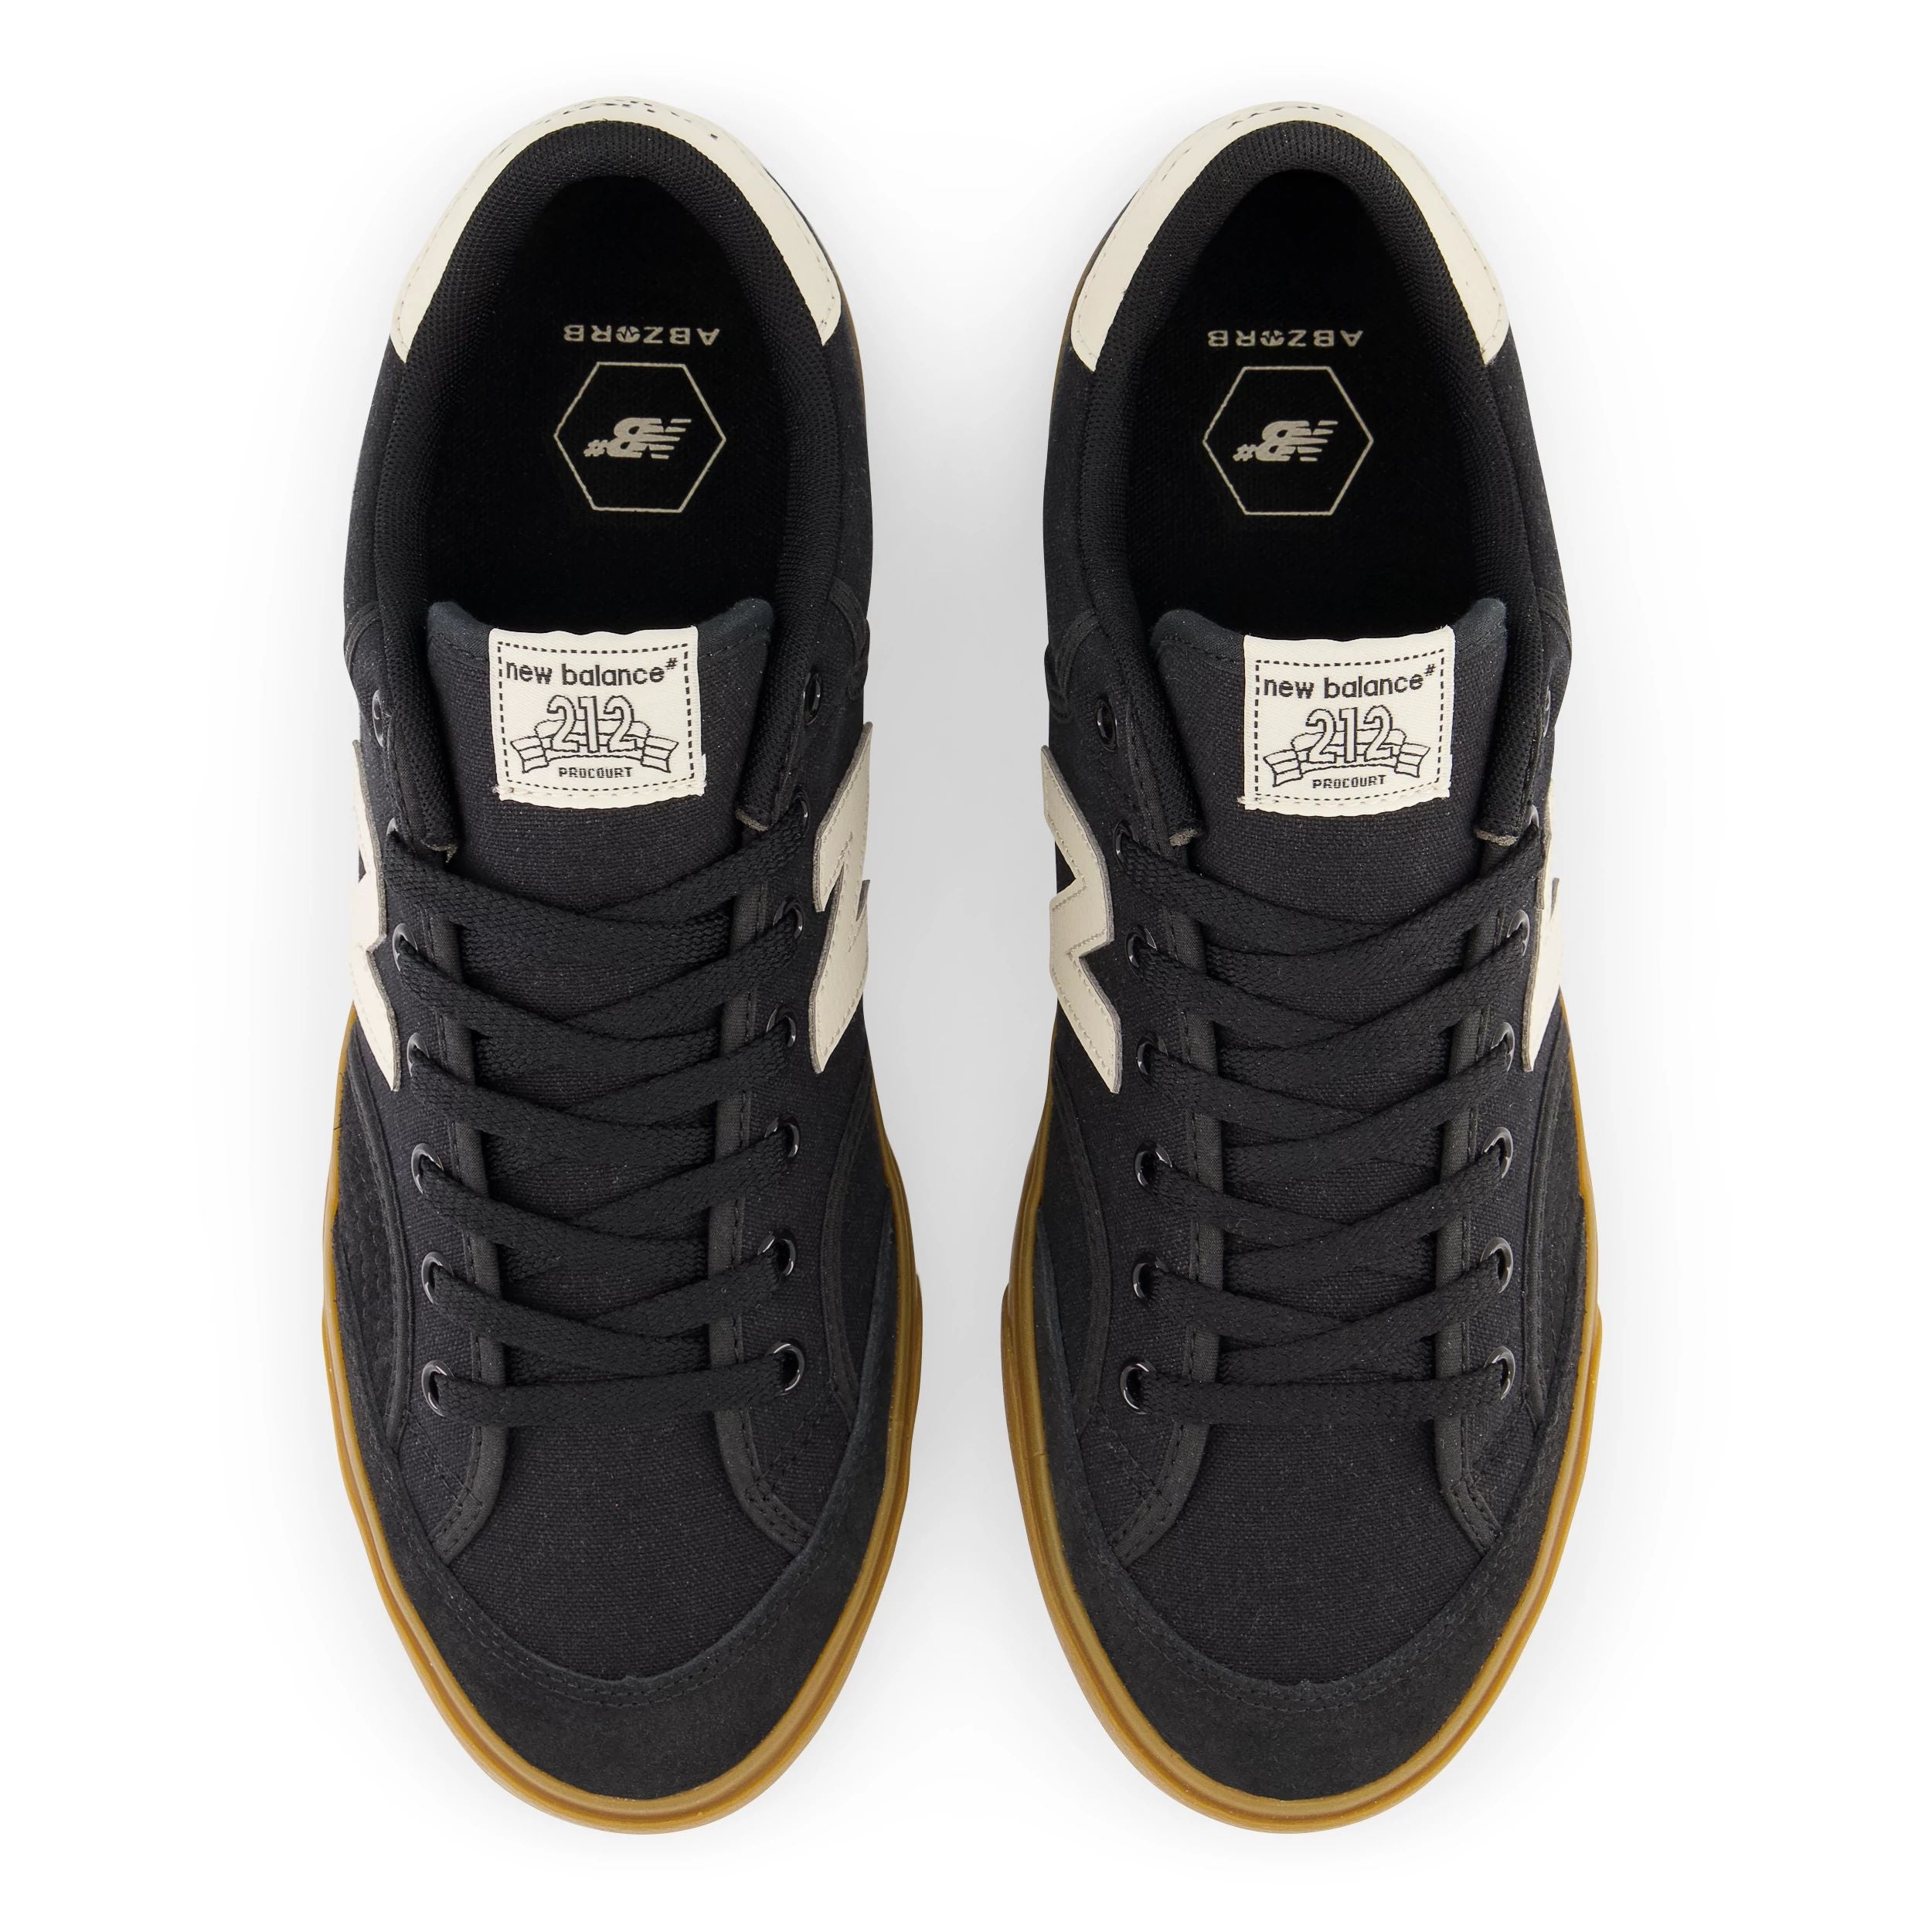 Black/Gum NM212 Pro Court NB Numeric Skate Shoe Top